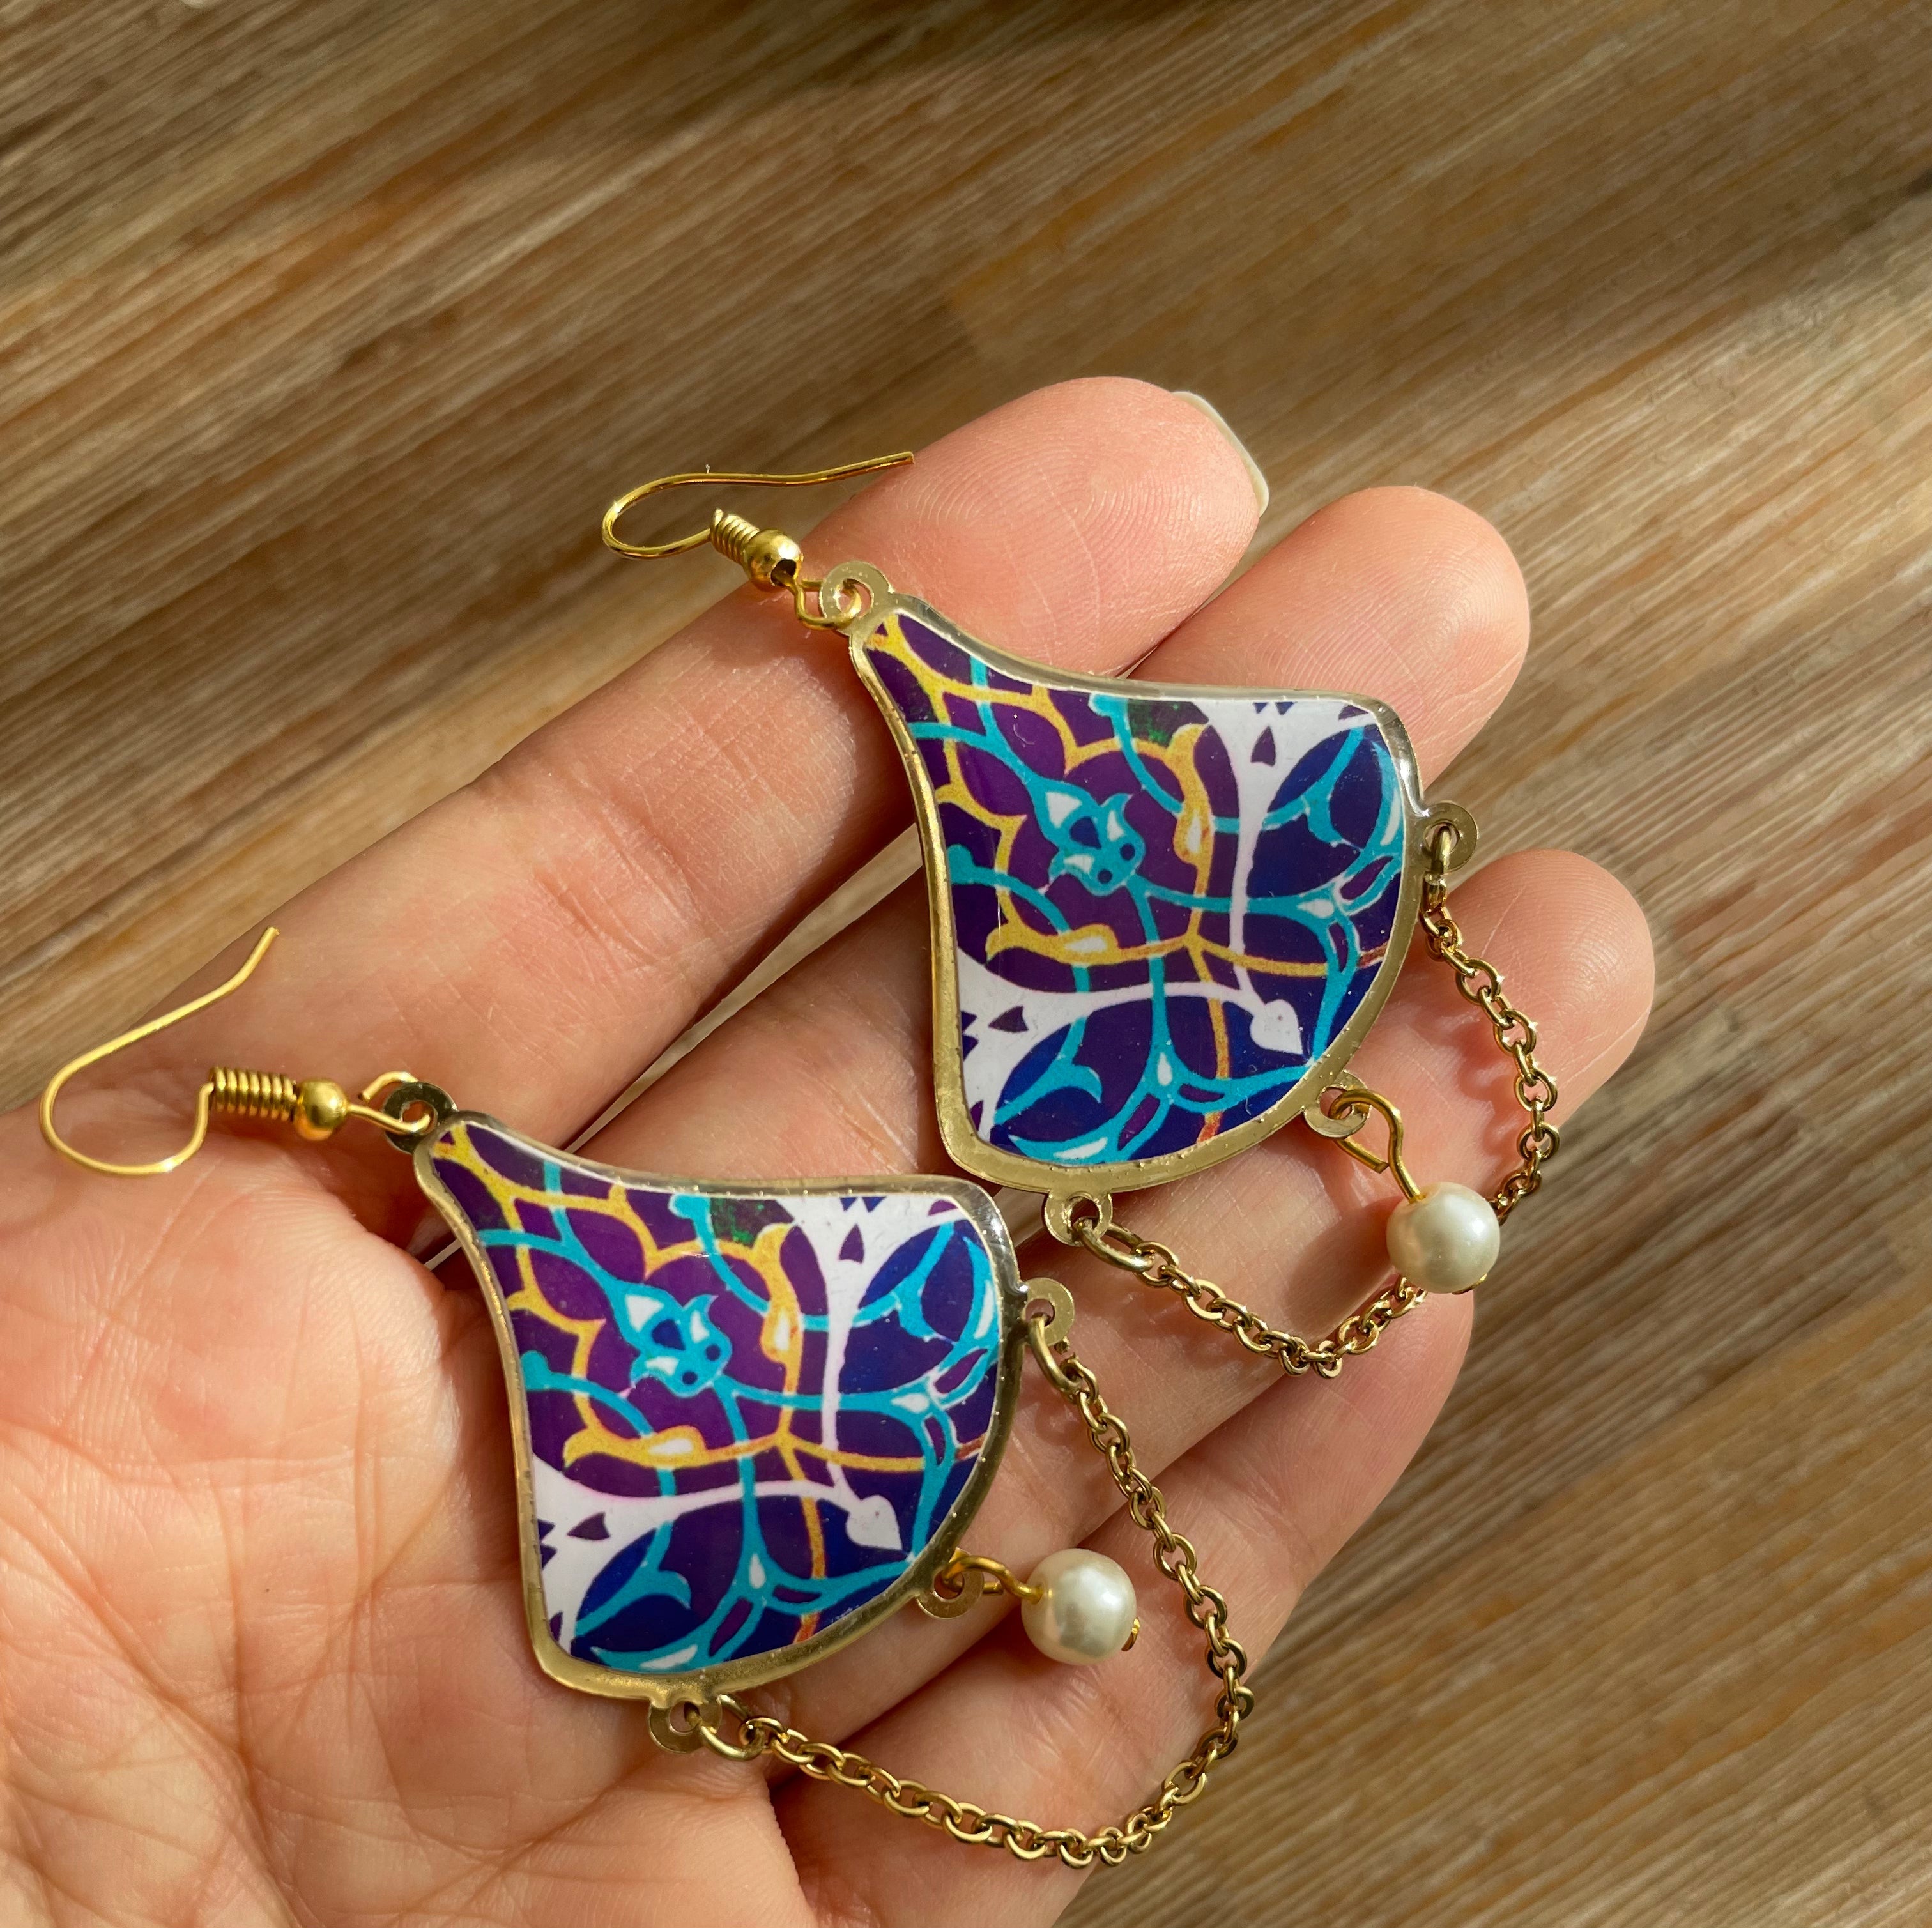 Persian EarringsBrass Earrings with Colorful Persian Symbols:Persian Jewelry-AFRA ART GALLERY